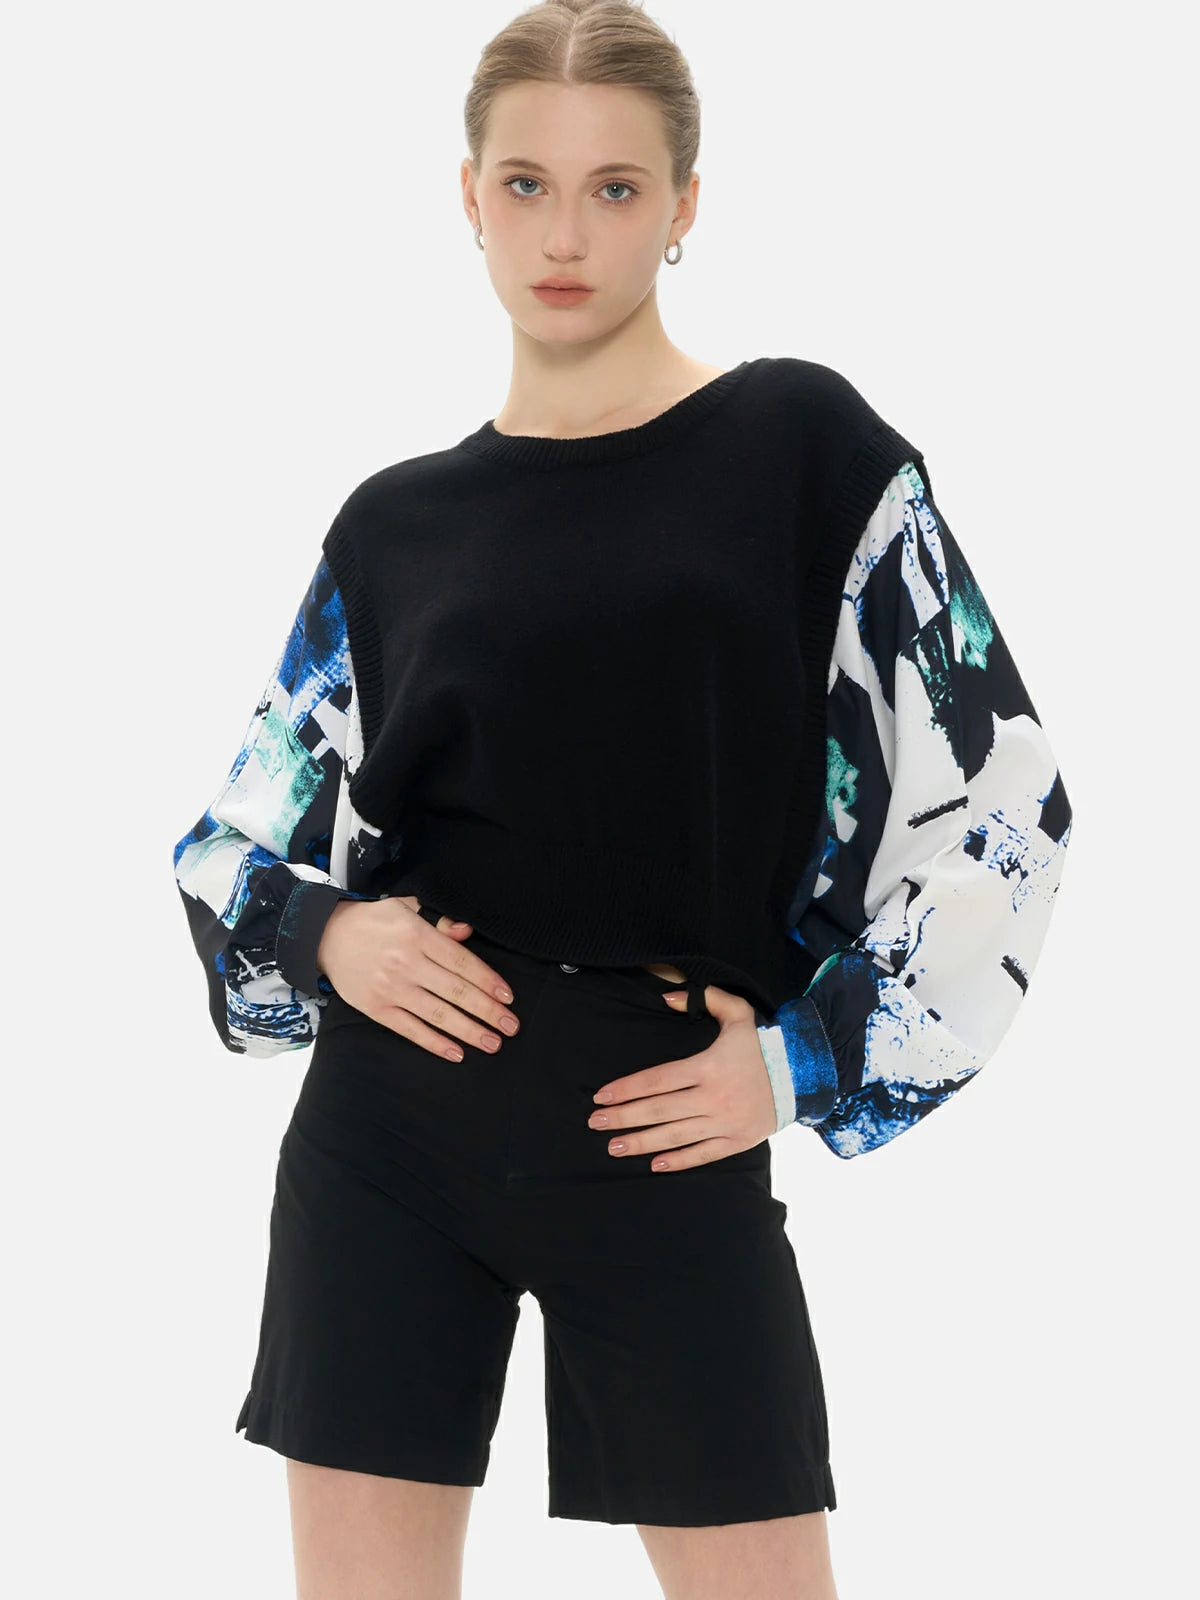 Chiffon splice sweater with fashionable design